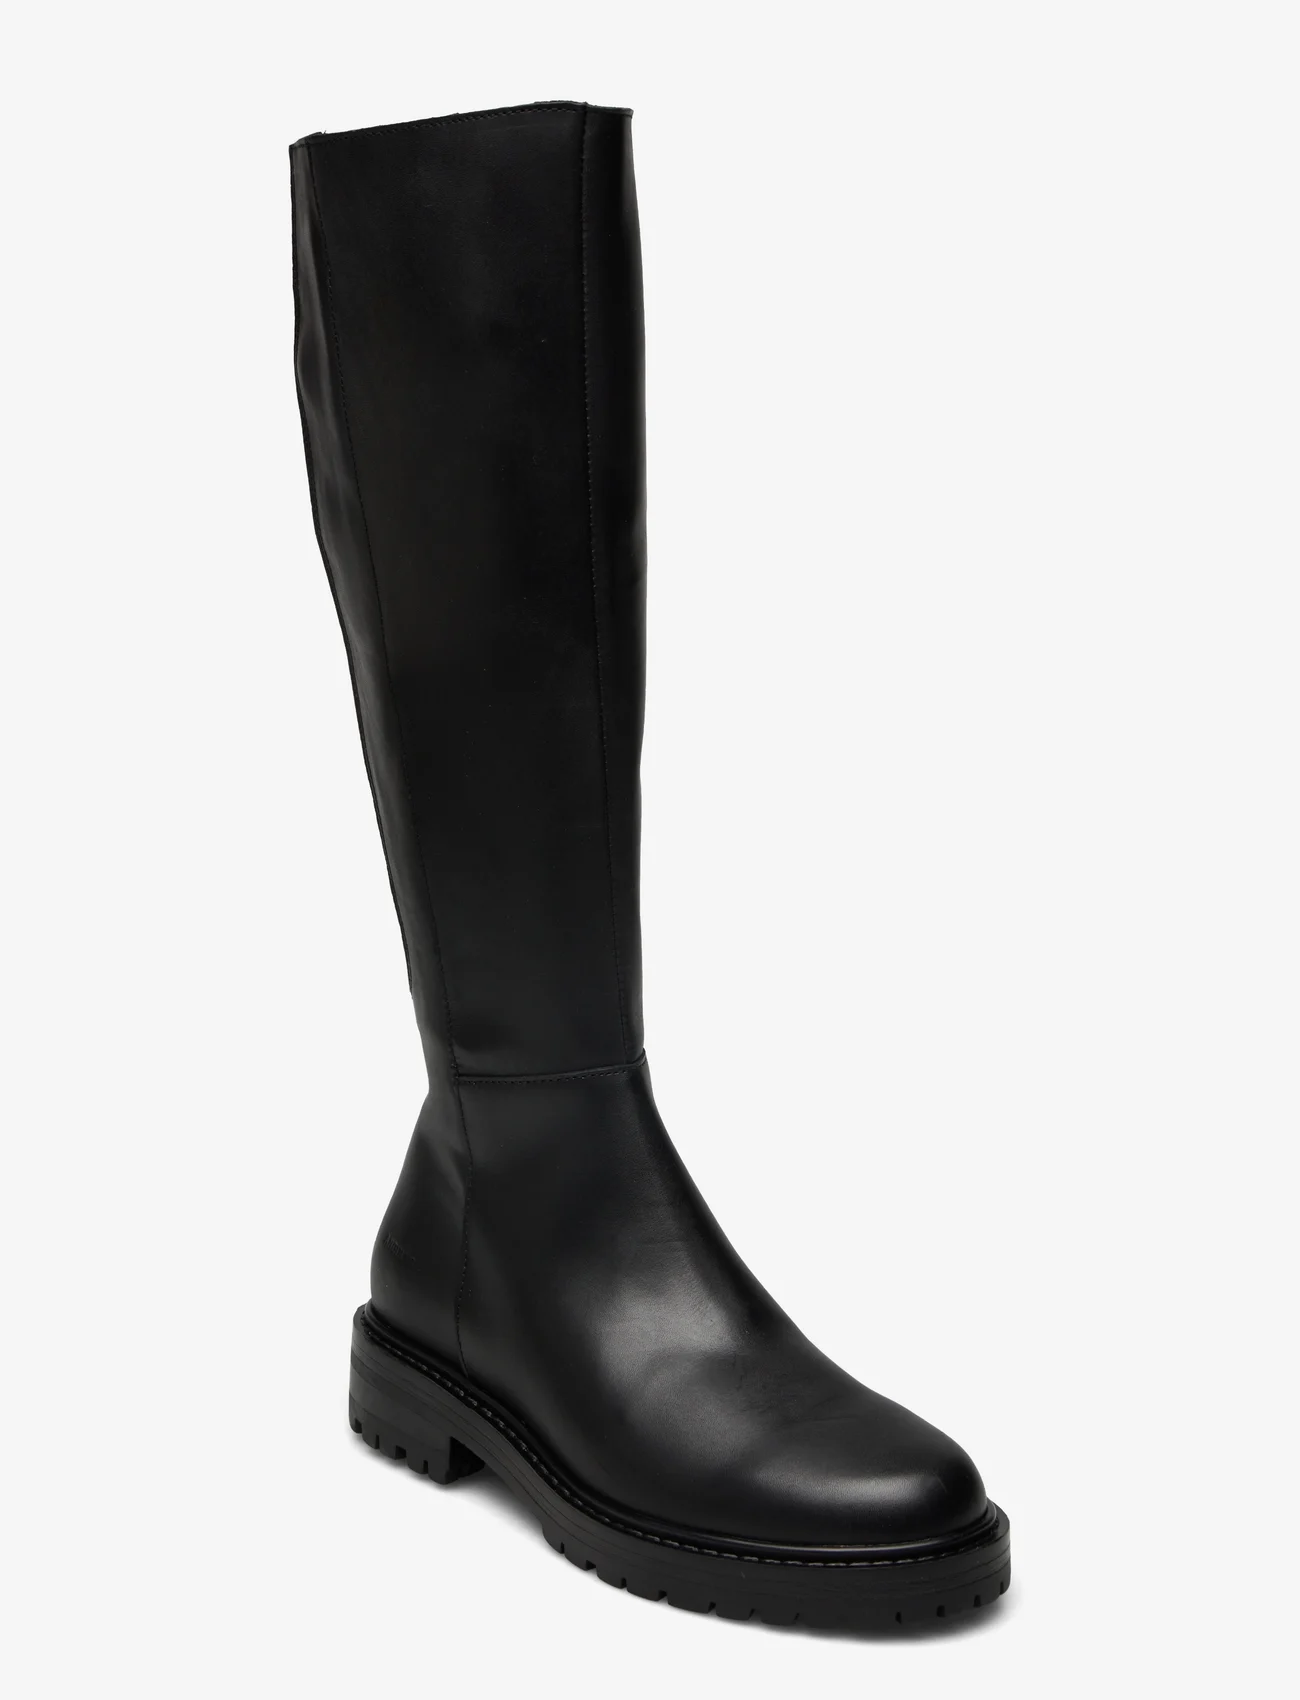 ANGULUS - Boots - flat - kniehohe stiefel - 1605/001 black basic/black - 0